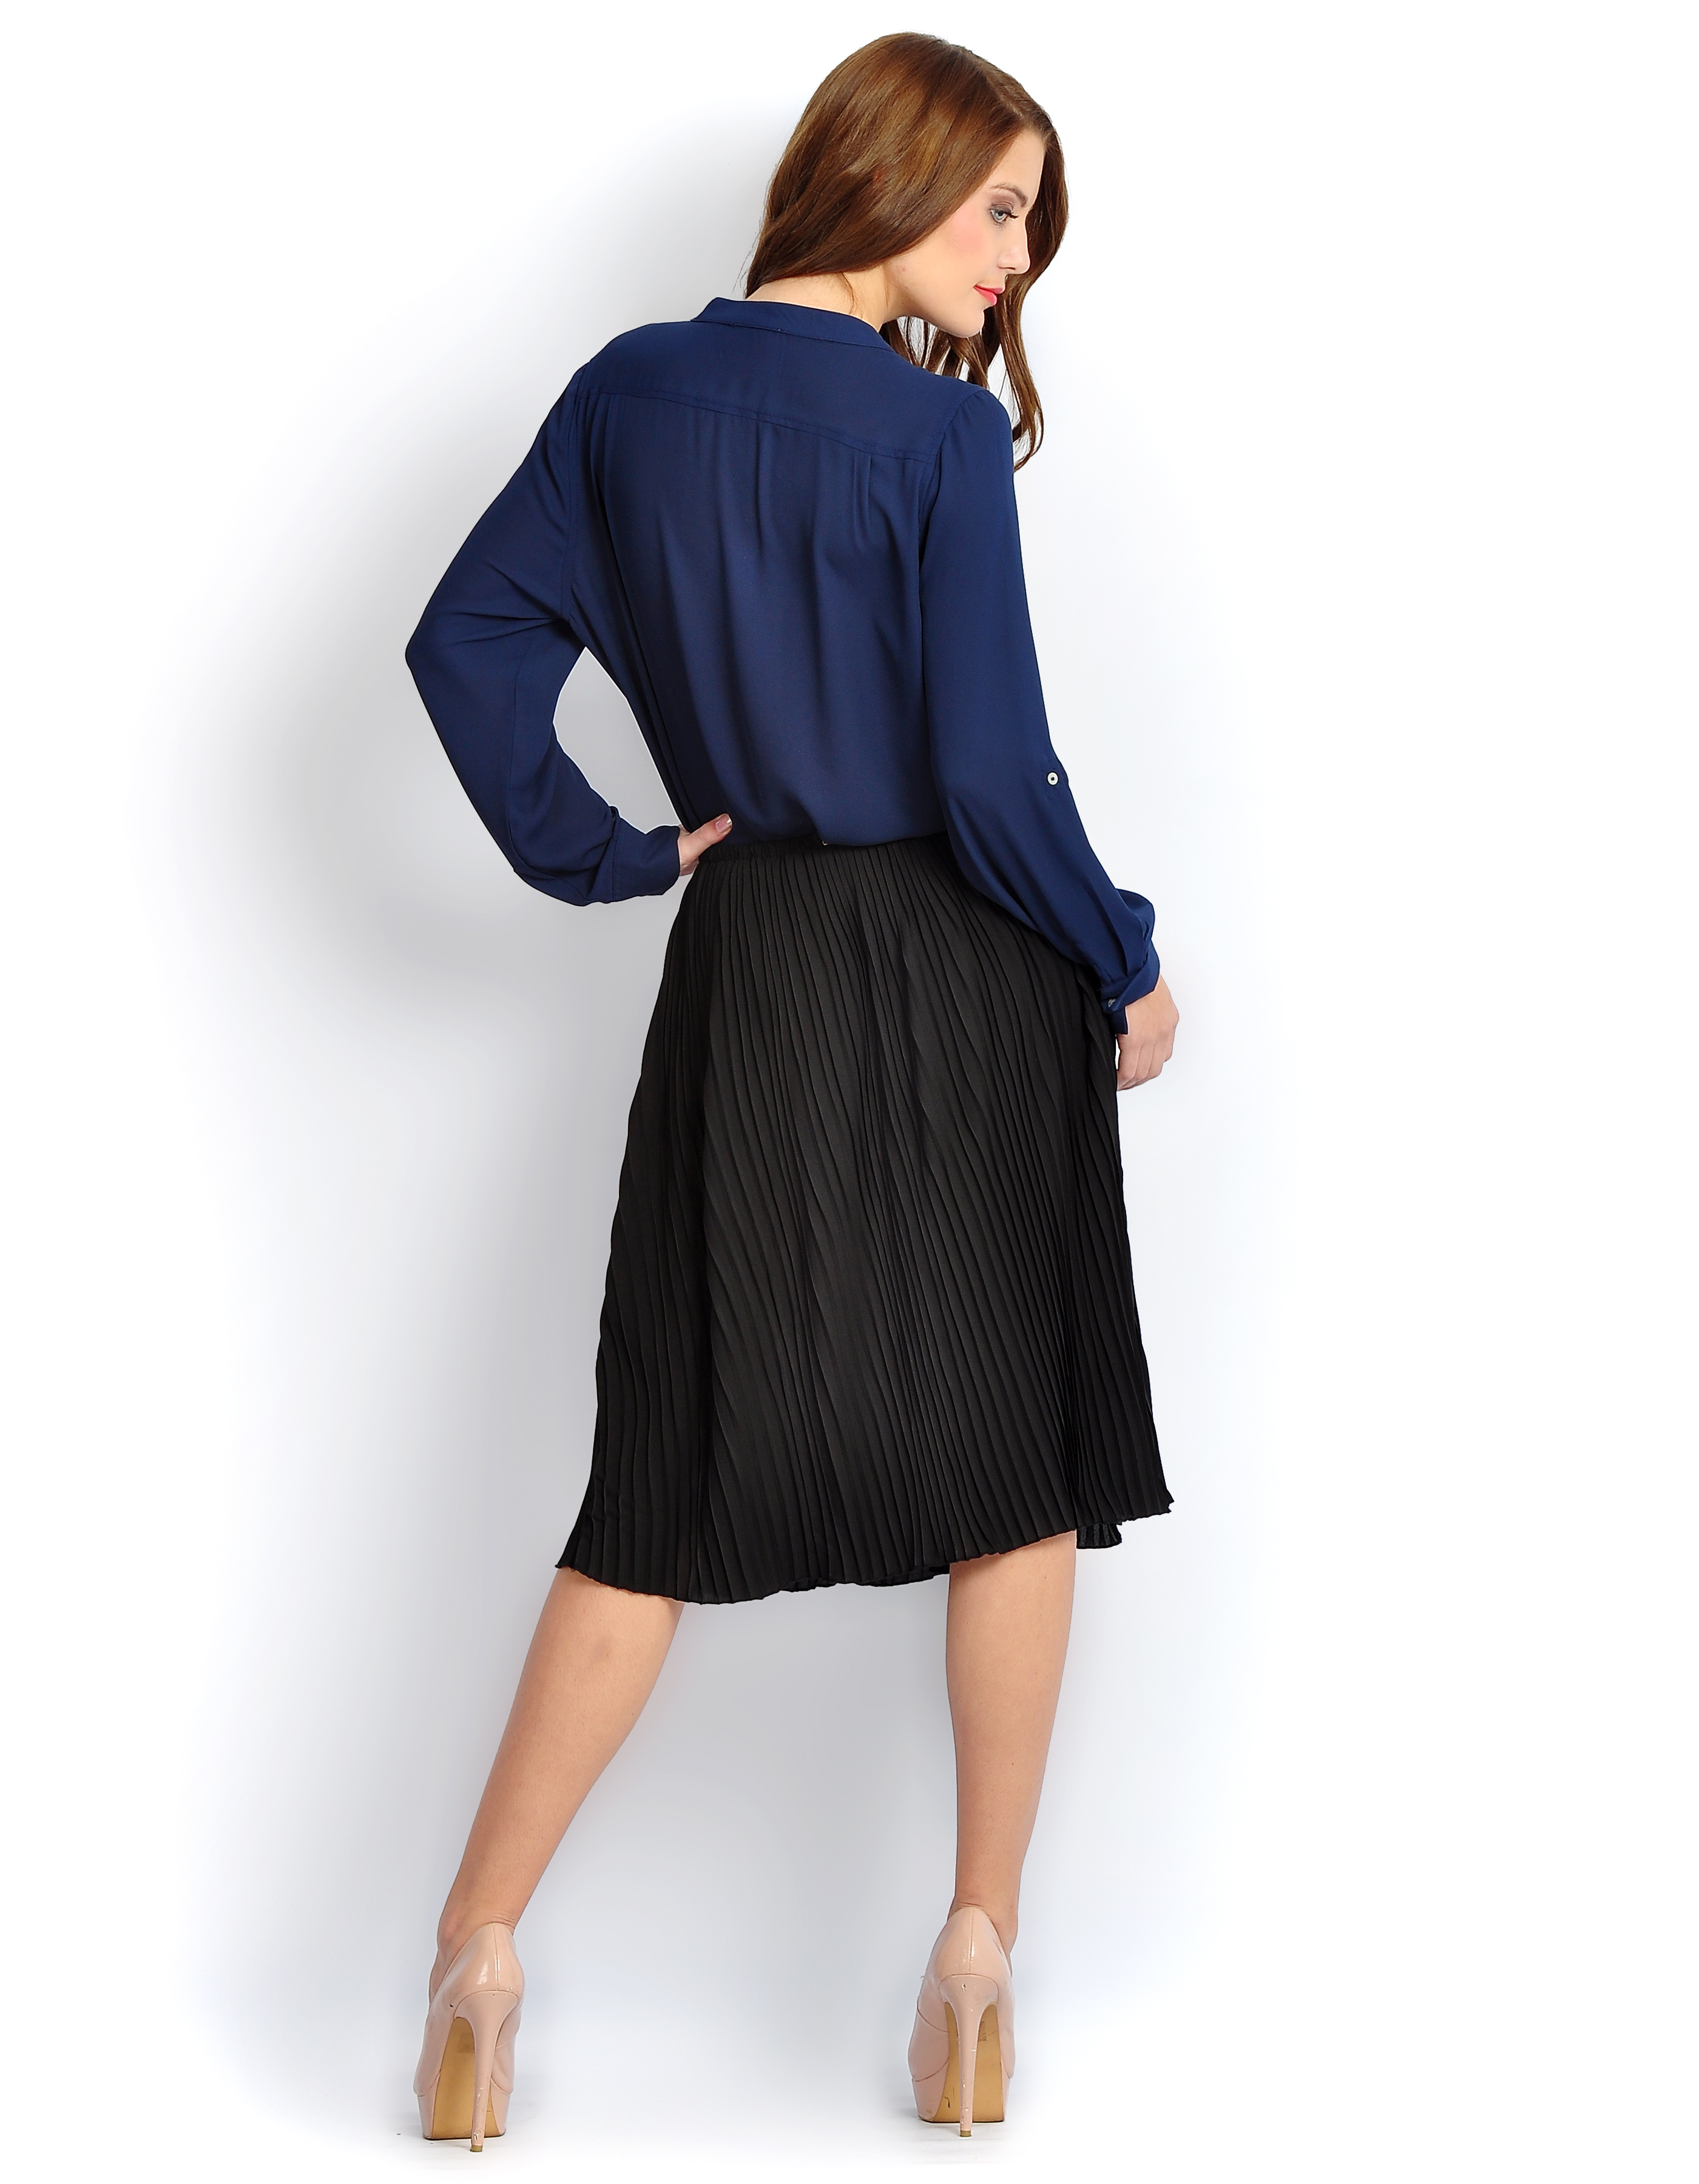 Solid black skirt by Chique | The Secret Label